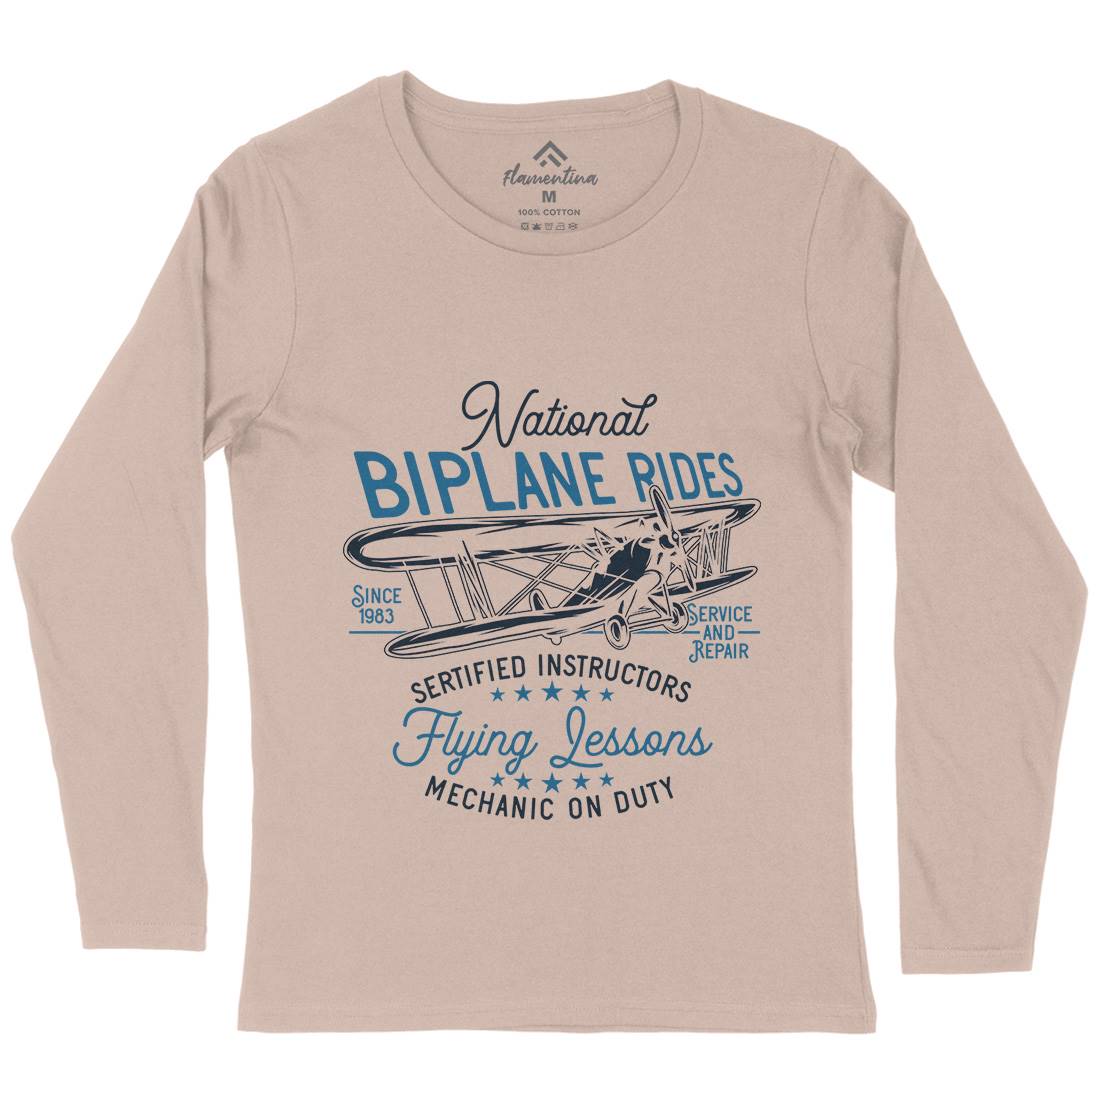 Biplane Rides Womens Long Sleeve T-Shirt Vehicles D910